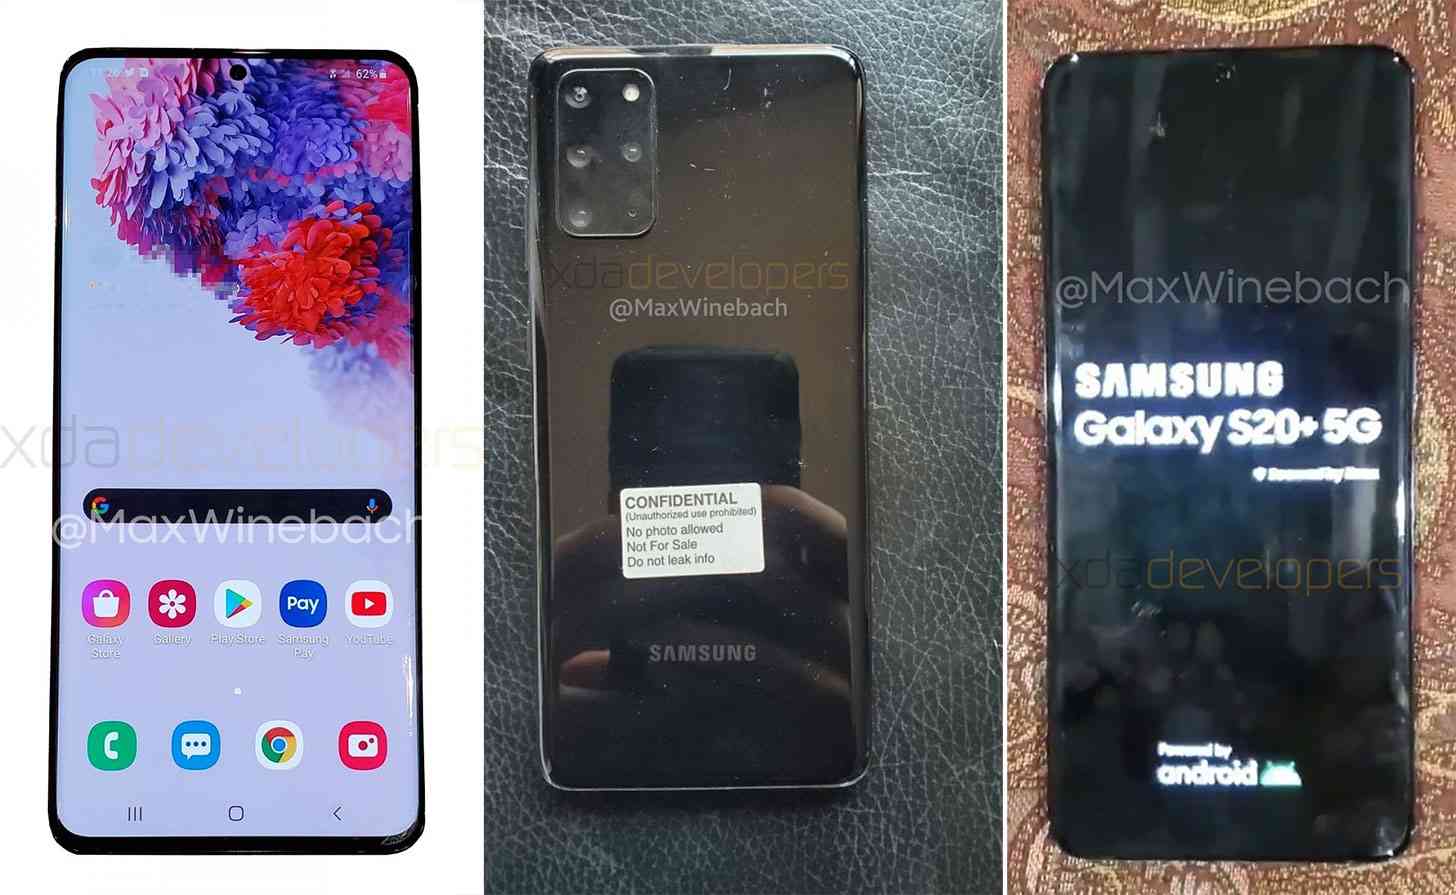 Samsung Galaxy S20+ hands-on photos